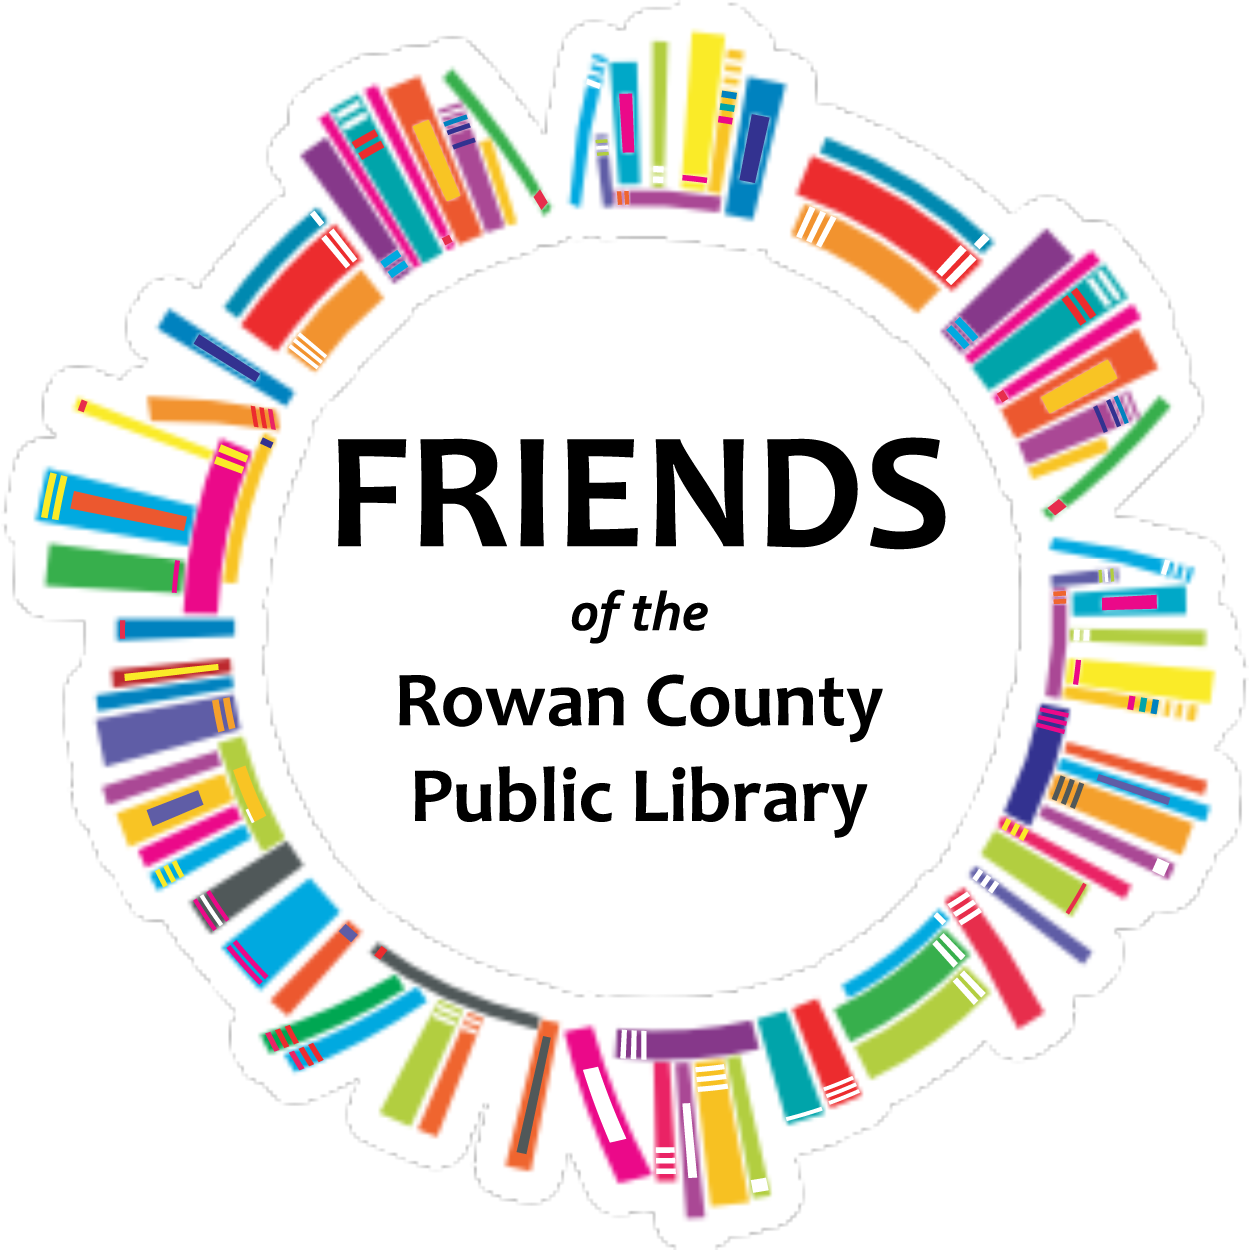 Friends of the Rowan County Public Library logo